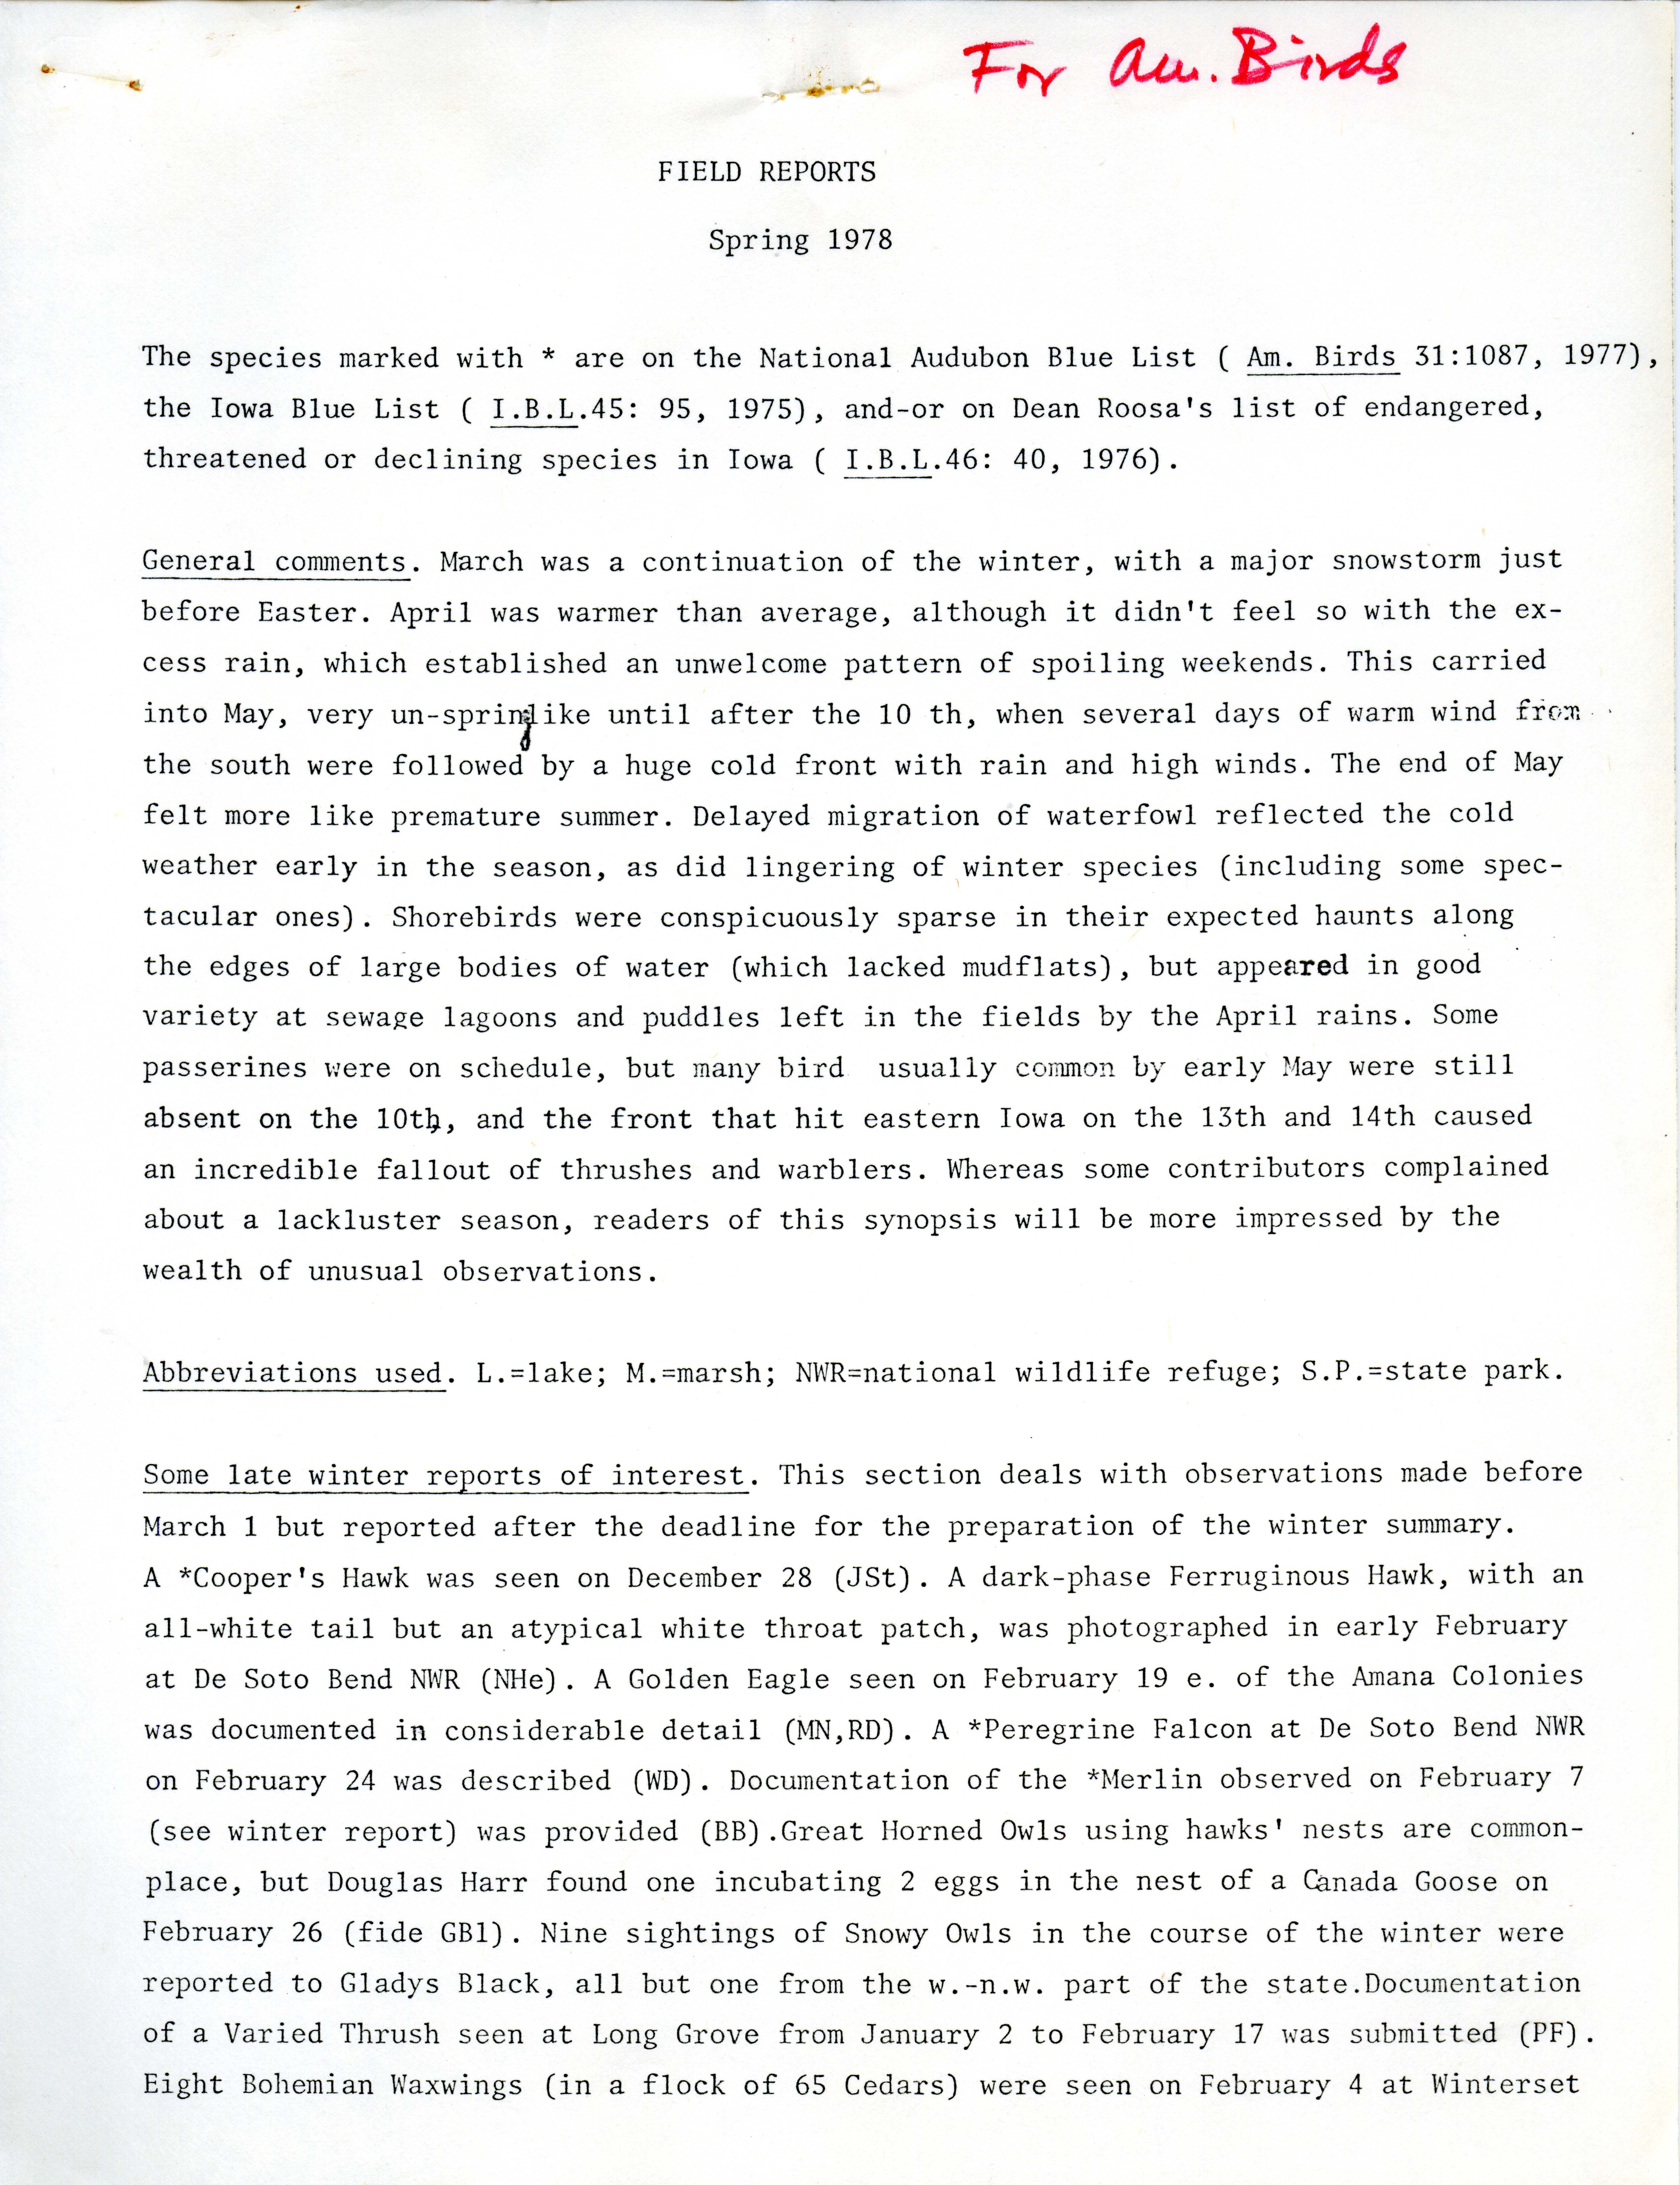 Iowa Ornithologists' Union, Quarterly field report, spring 1978